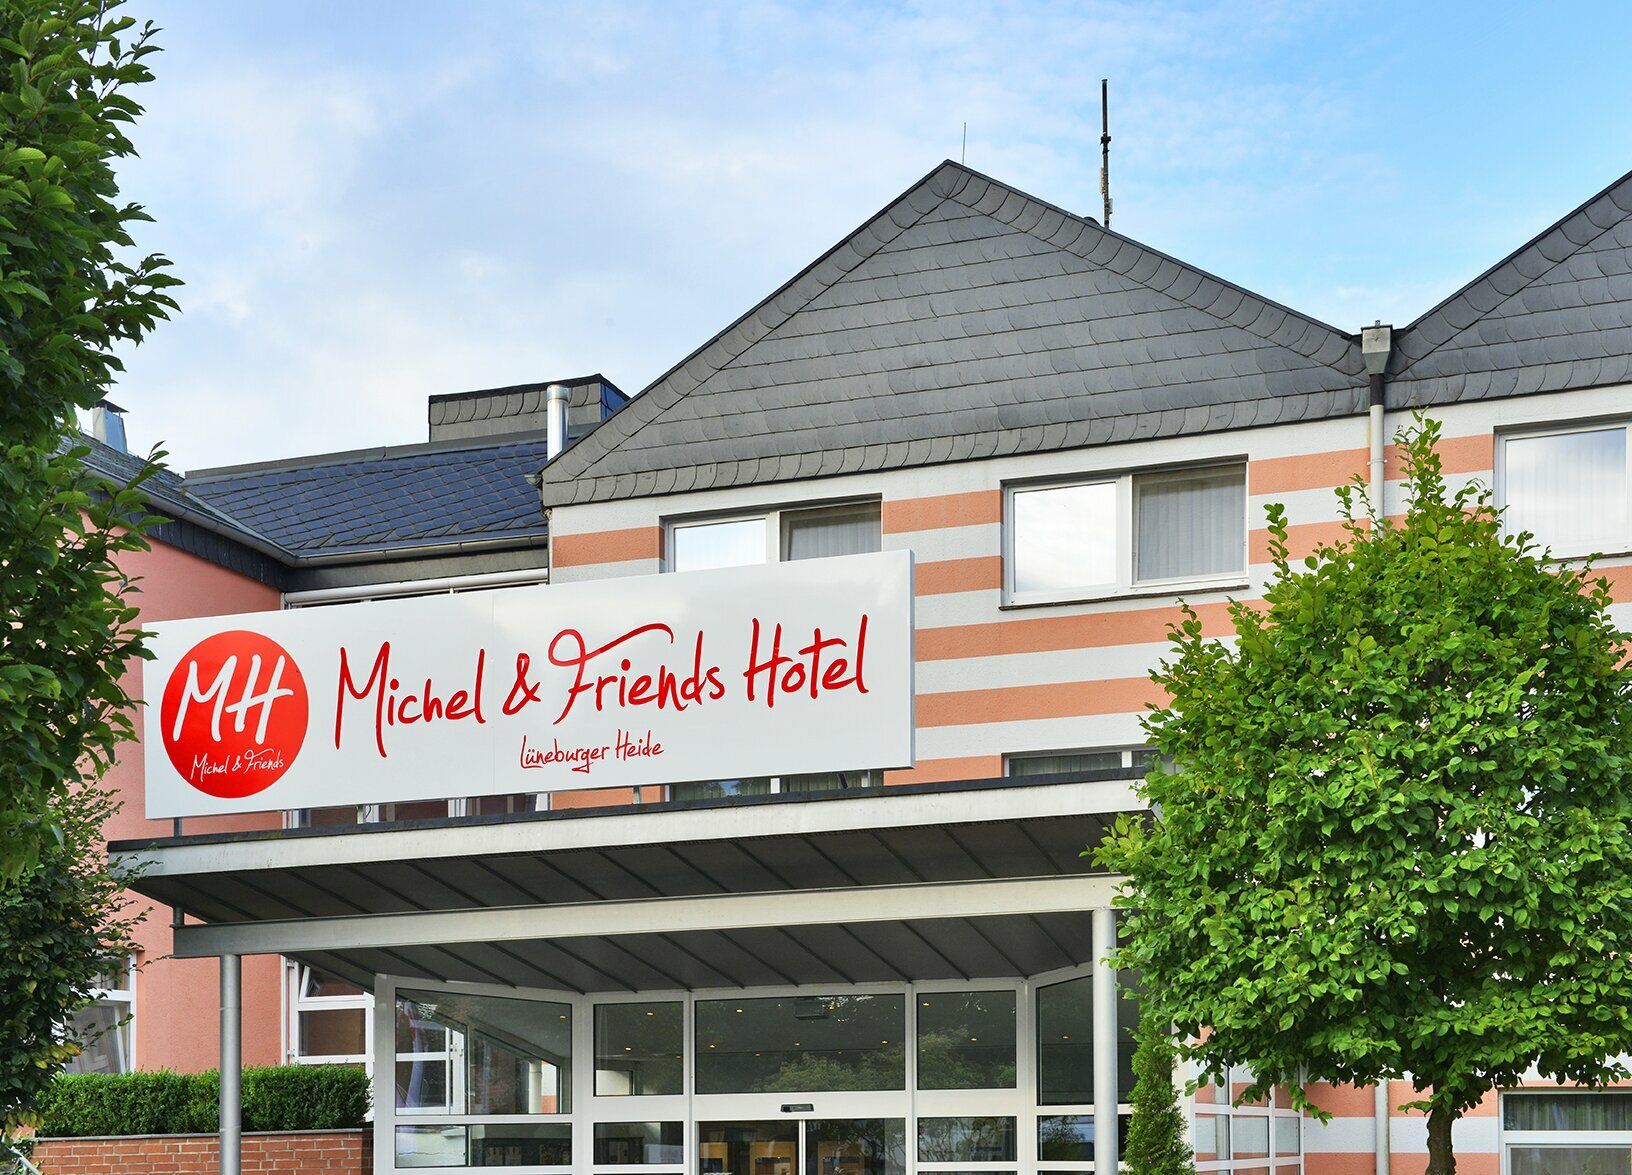 3 Tage Lüneburger Heide Package – Michel &amp, Friends Hotel Lüneburger Heide (4 Sterne) in Hodenhagen, Niedersachsen inkl. Halbpension